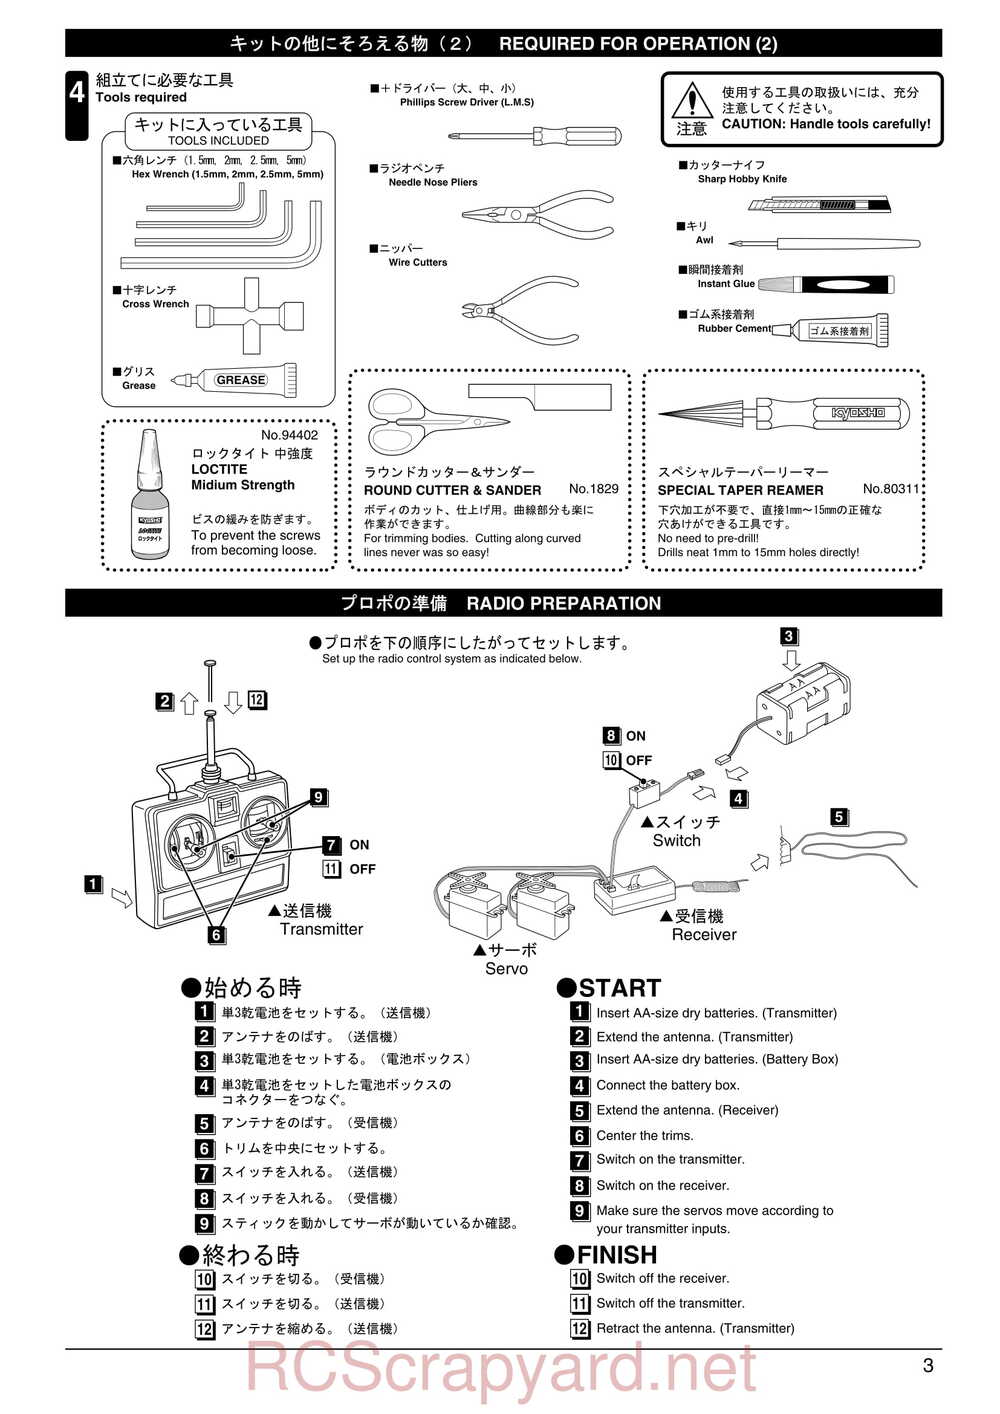 Kyosho - 31001 - GP SuperTen FW-04 - Manual - Page 03